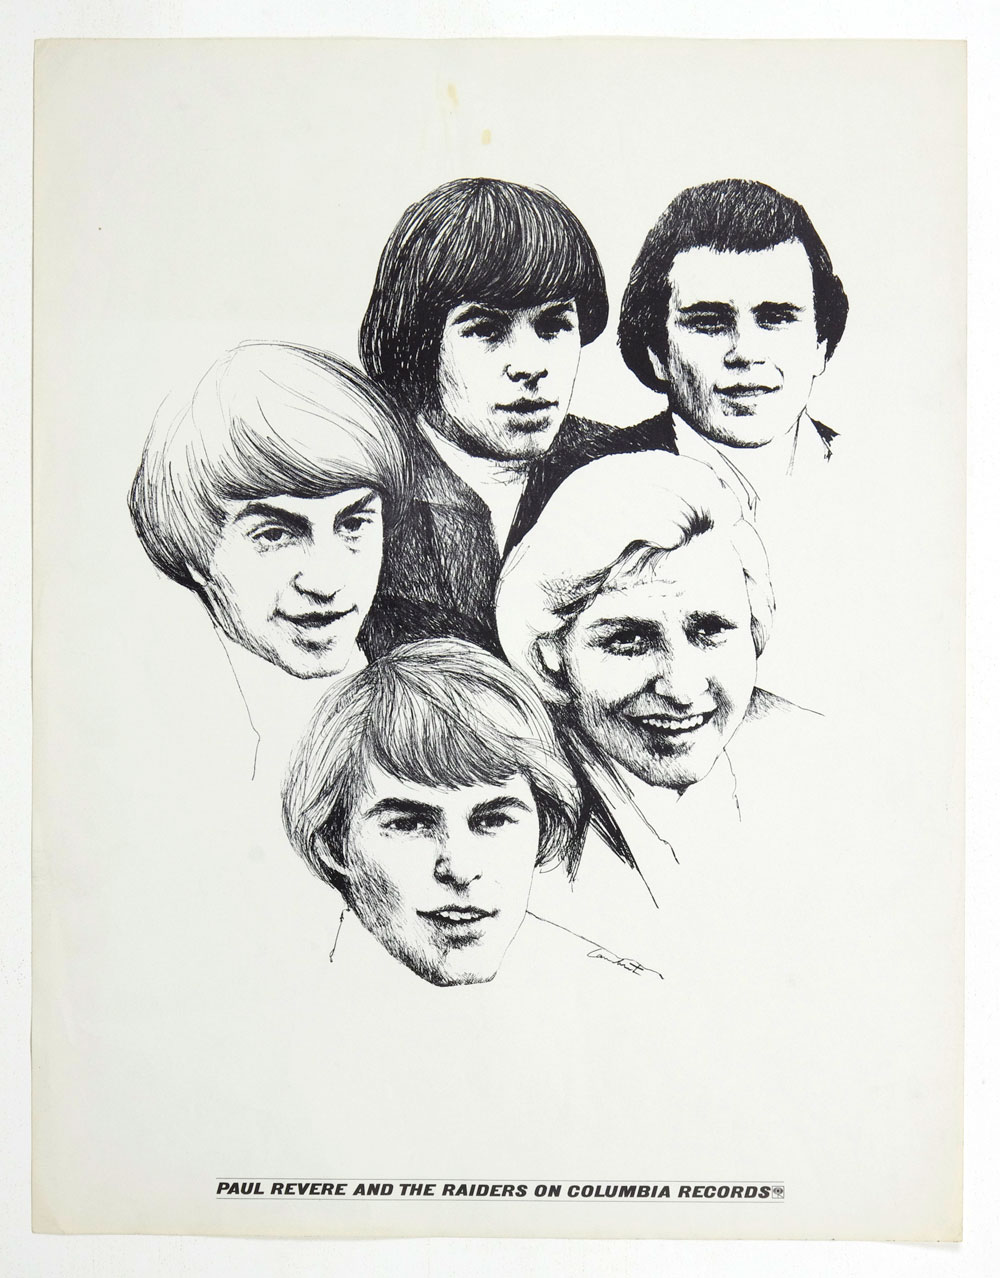 Paul Revere and the Raiders Poster 1966 Debut Album Prmo Columbia Records